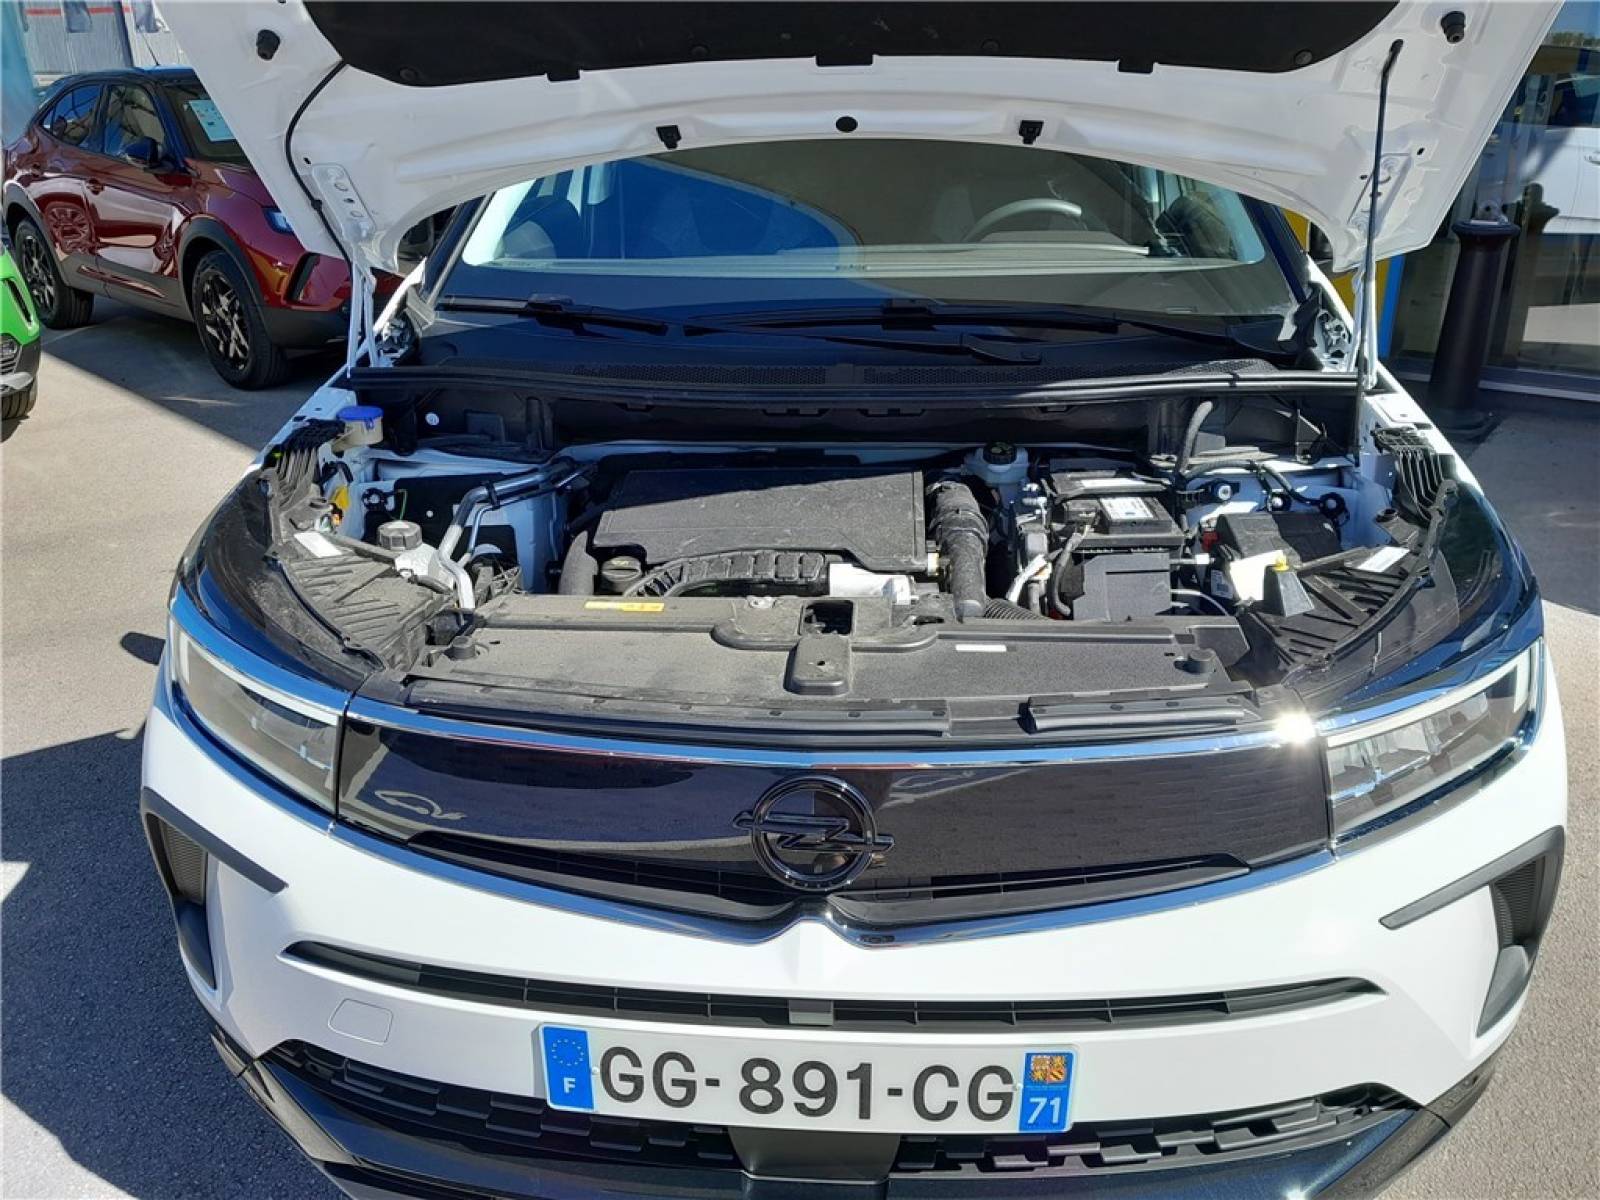 OPEL Grandland 1.2 Turbo 130 ch BVA8 - véhicule d'occasion - Groupe Guillet - Opel Magicauto - Chalon-sur-Saône - 71380 - Saint-Marcel - 17